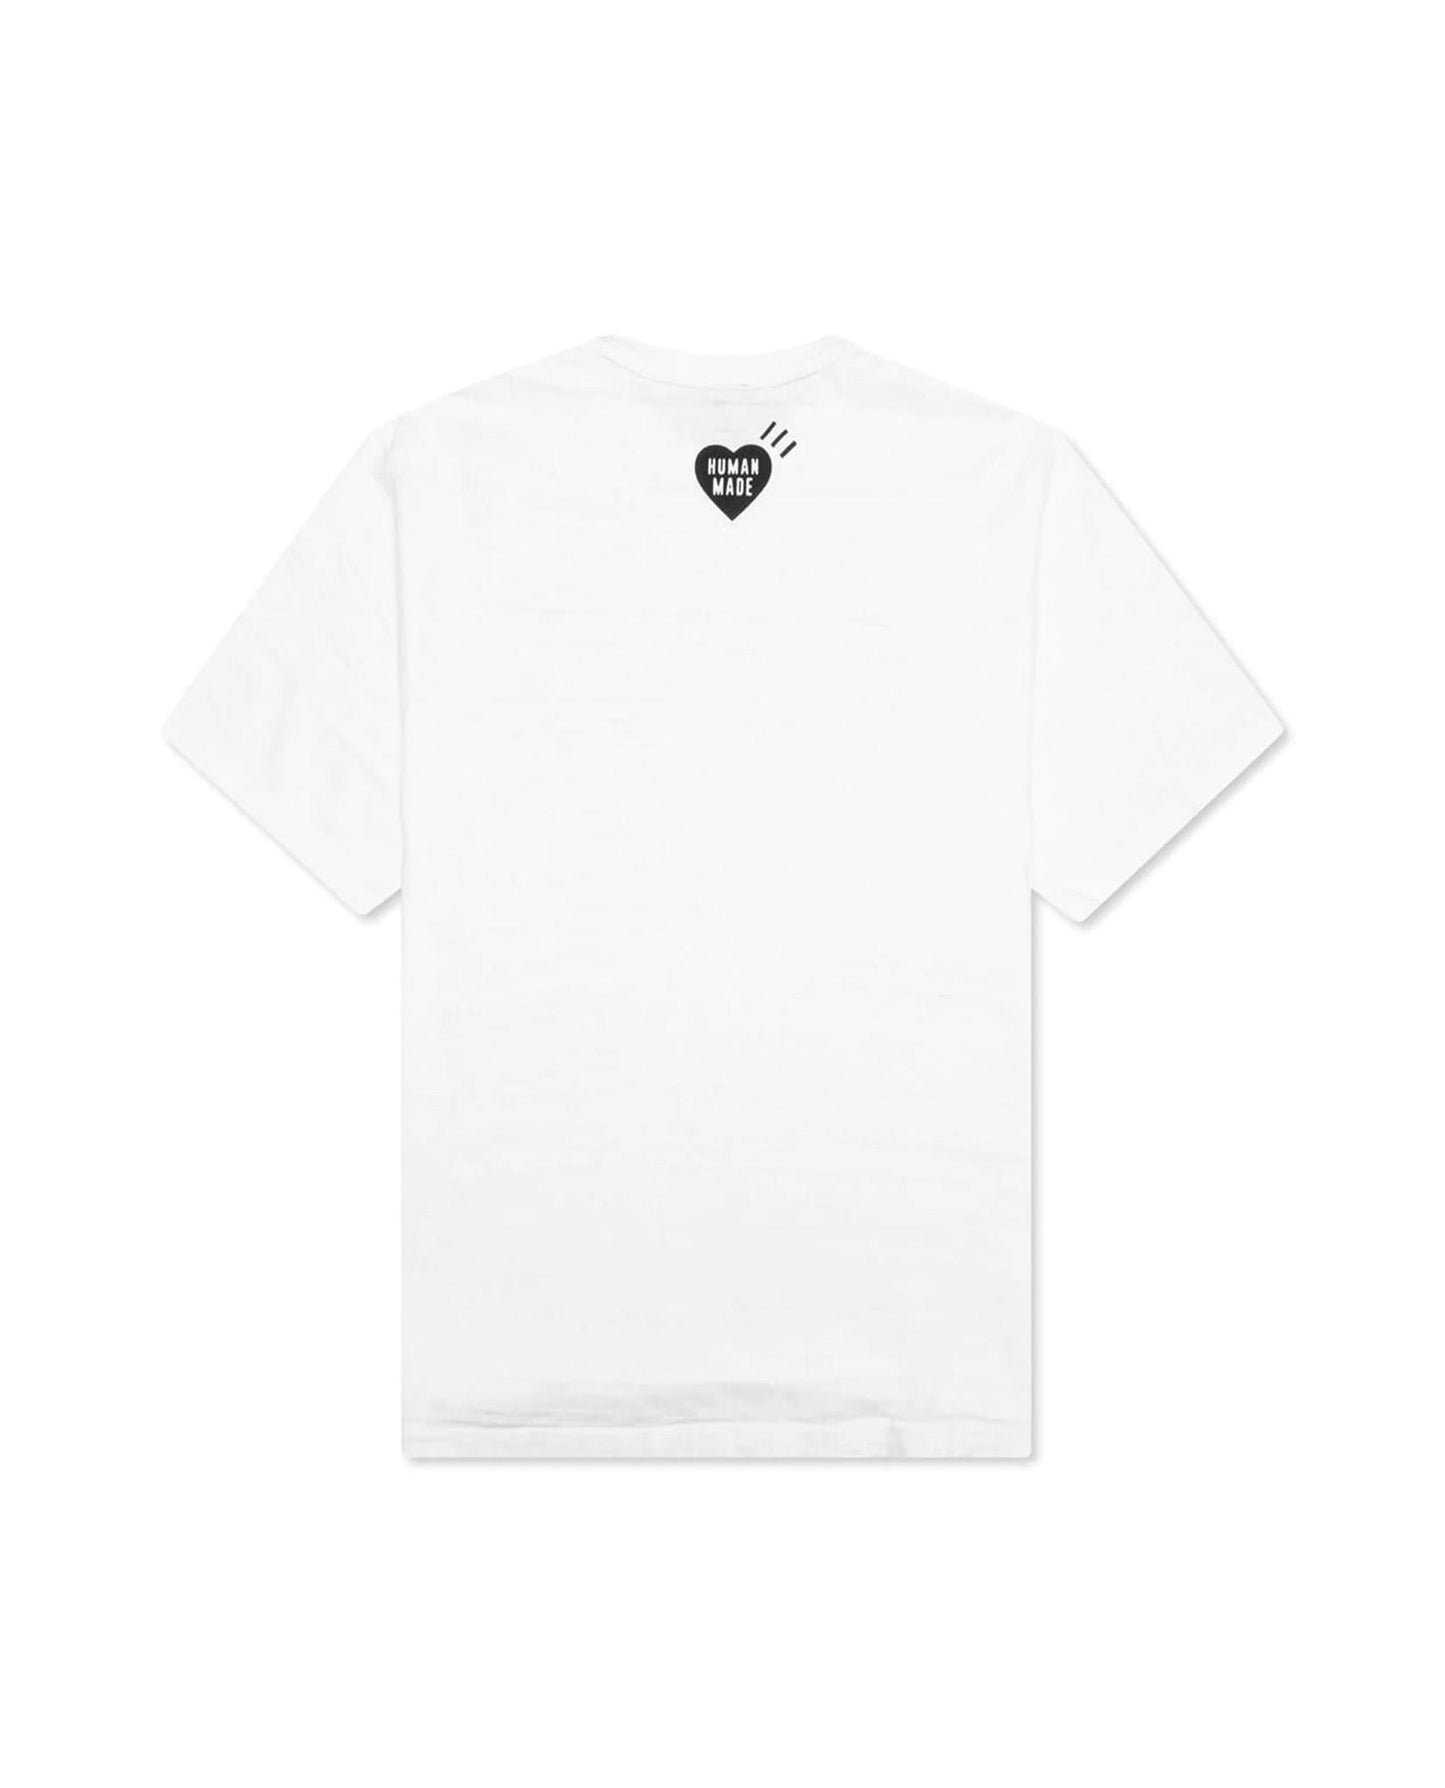 Human Made Graphic T-Shirt #01 | STASHED